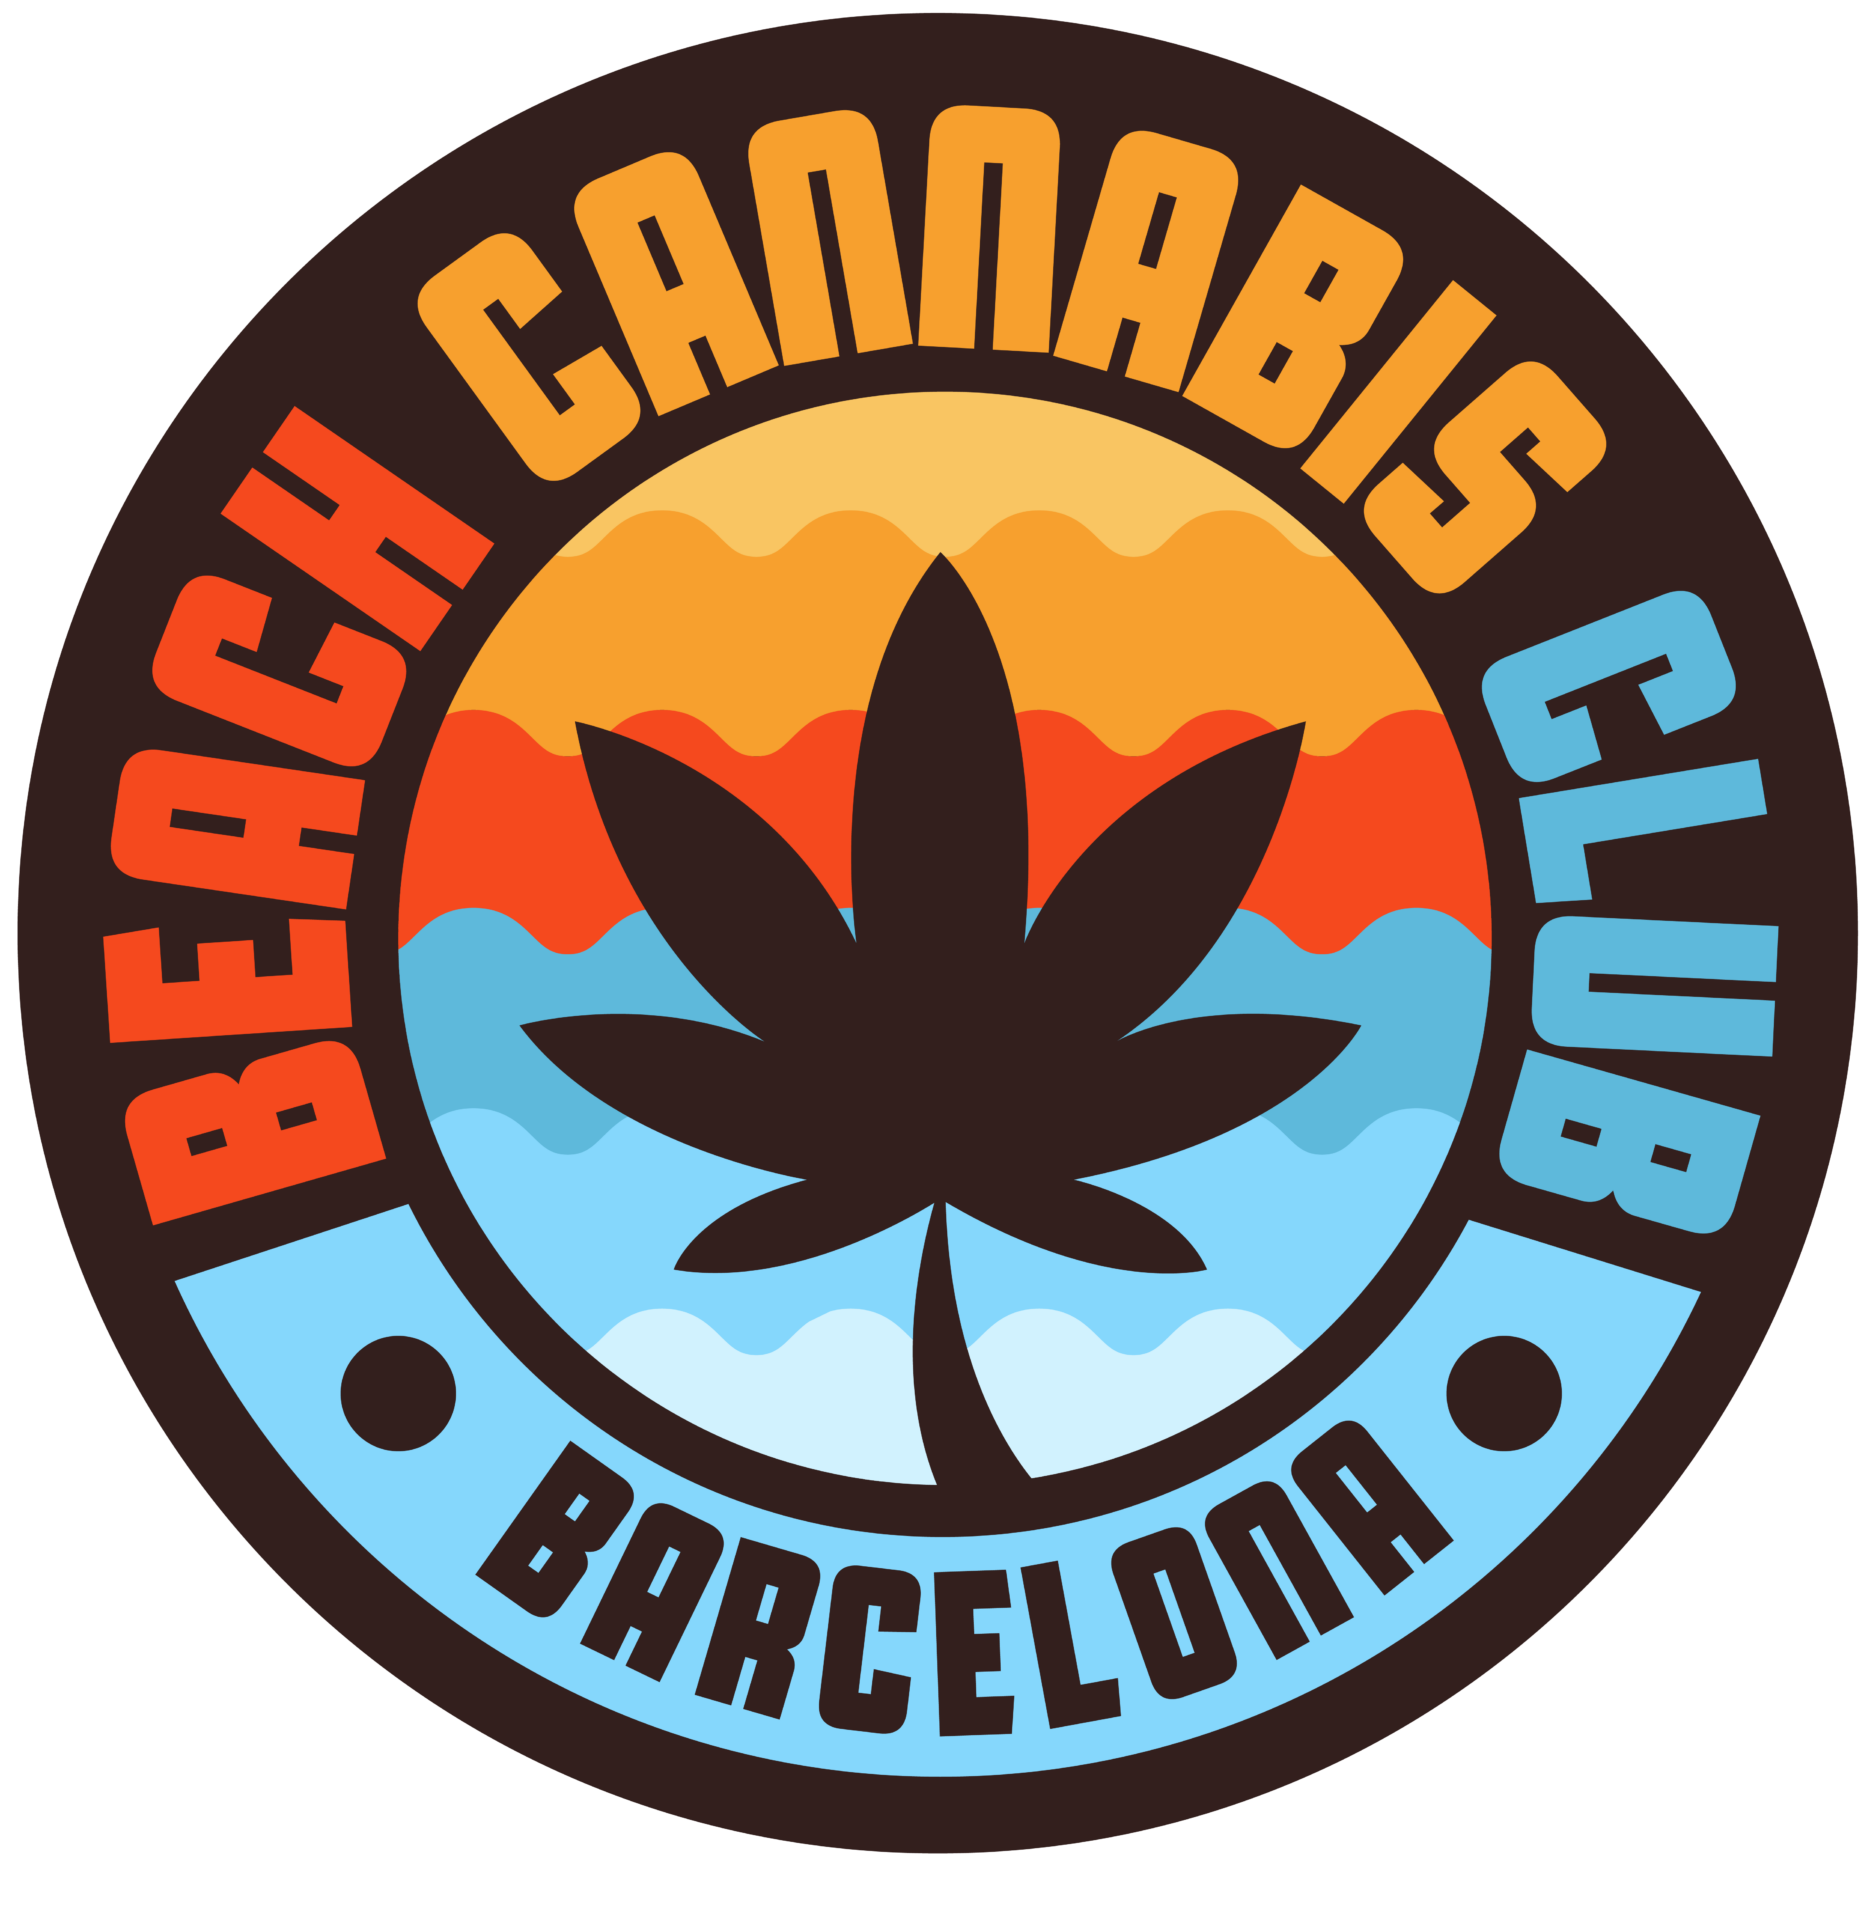 Beach Cannabis Club Barcelona